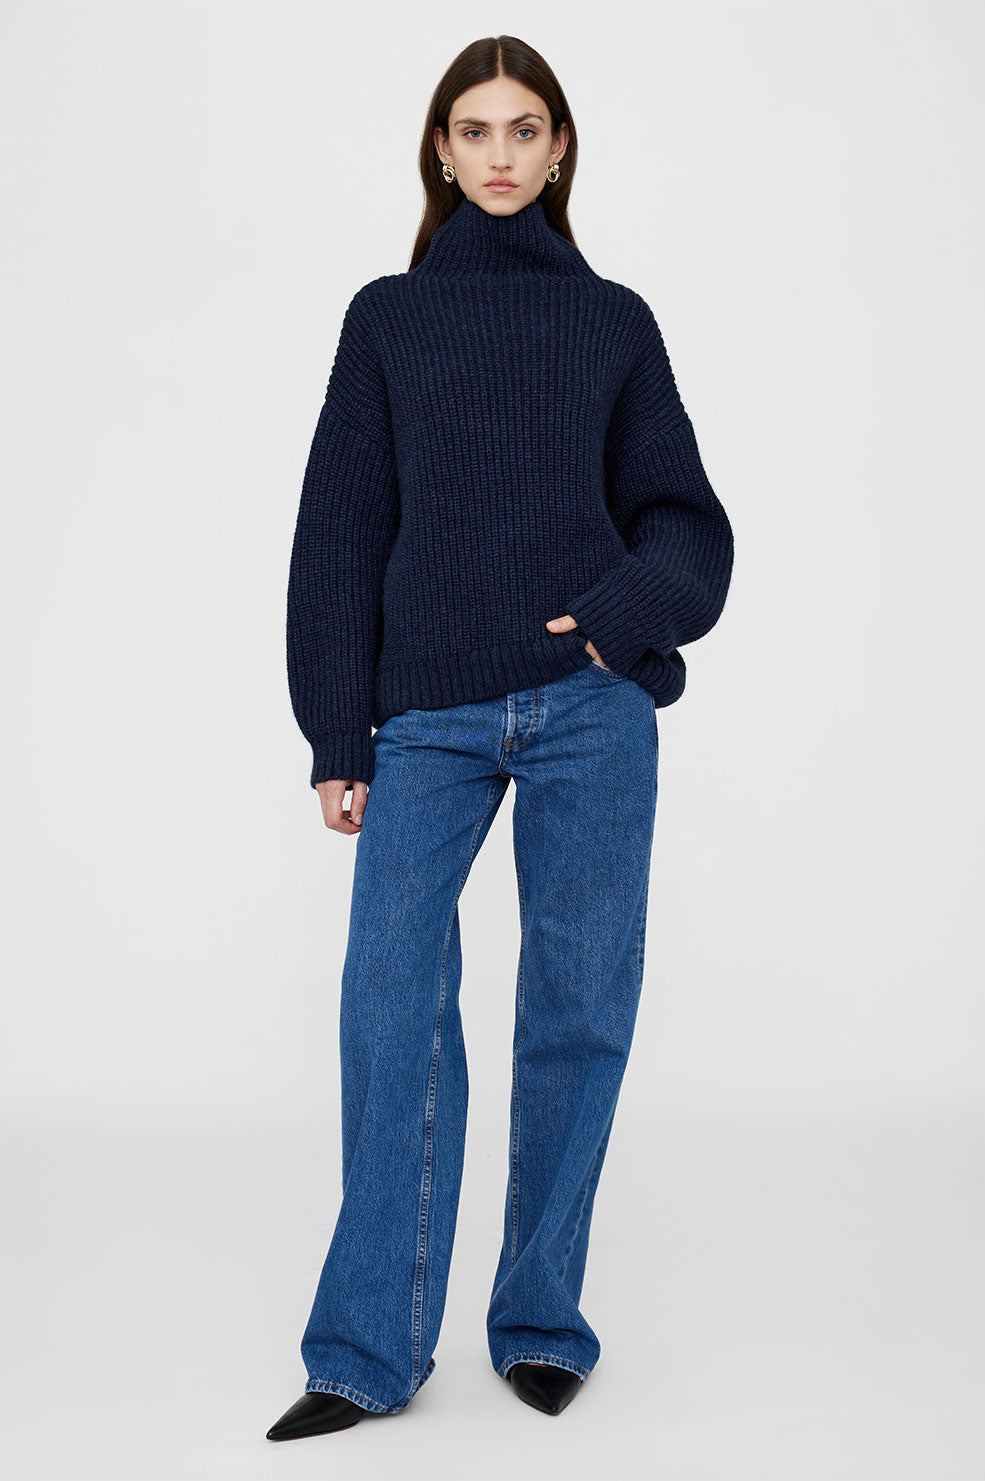 ANINE BING Sydney Sweater - Midnight Navy - On Model Front